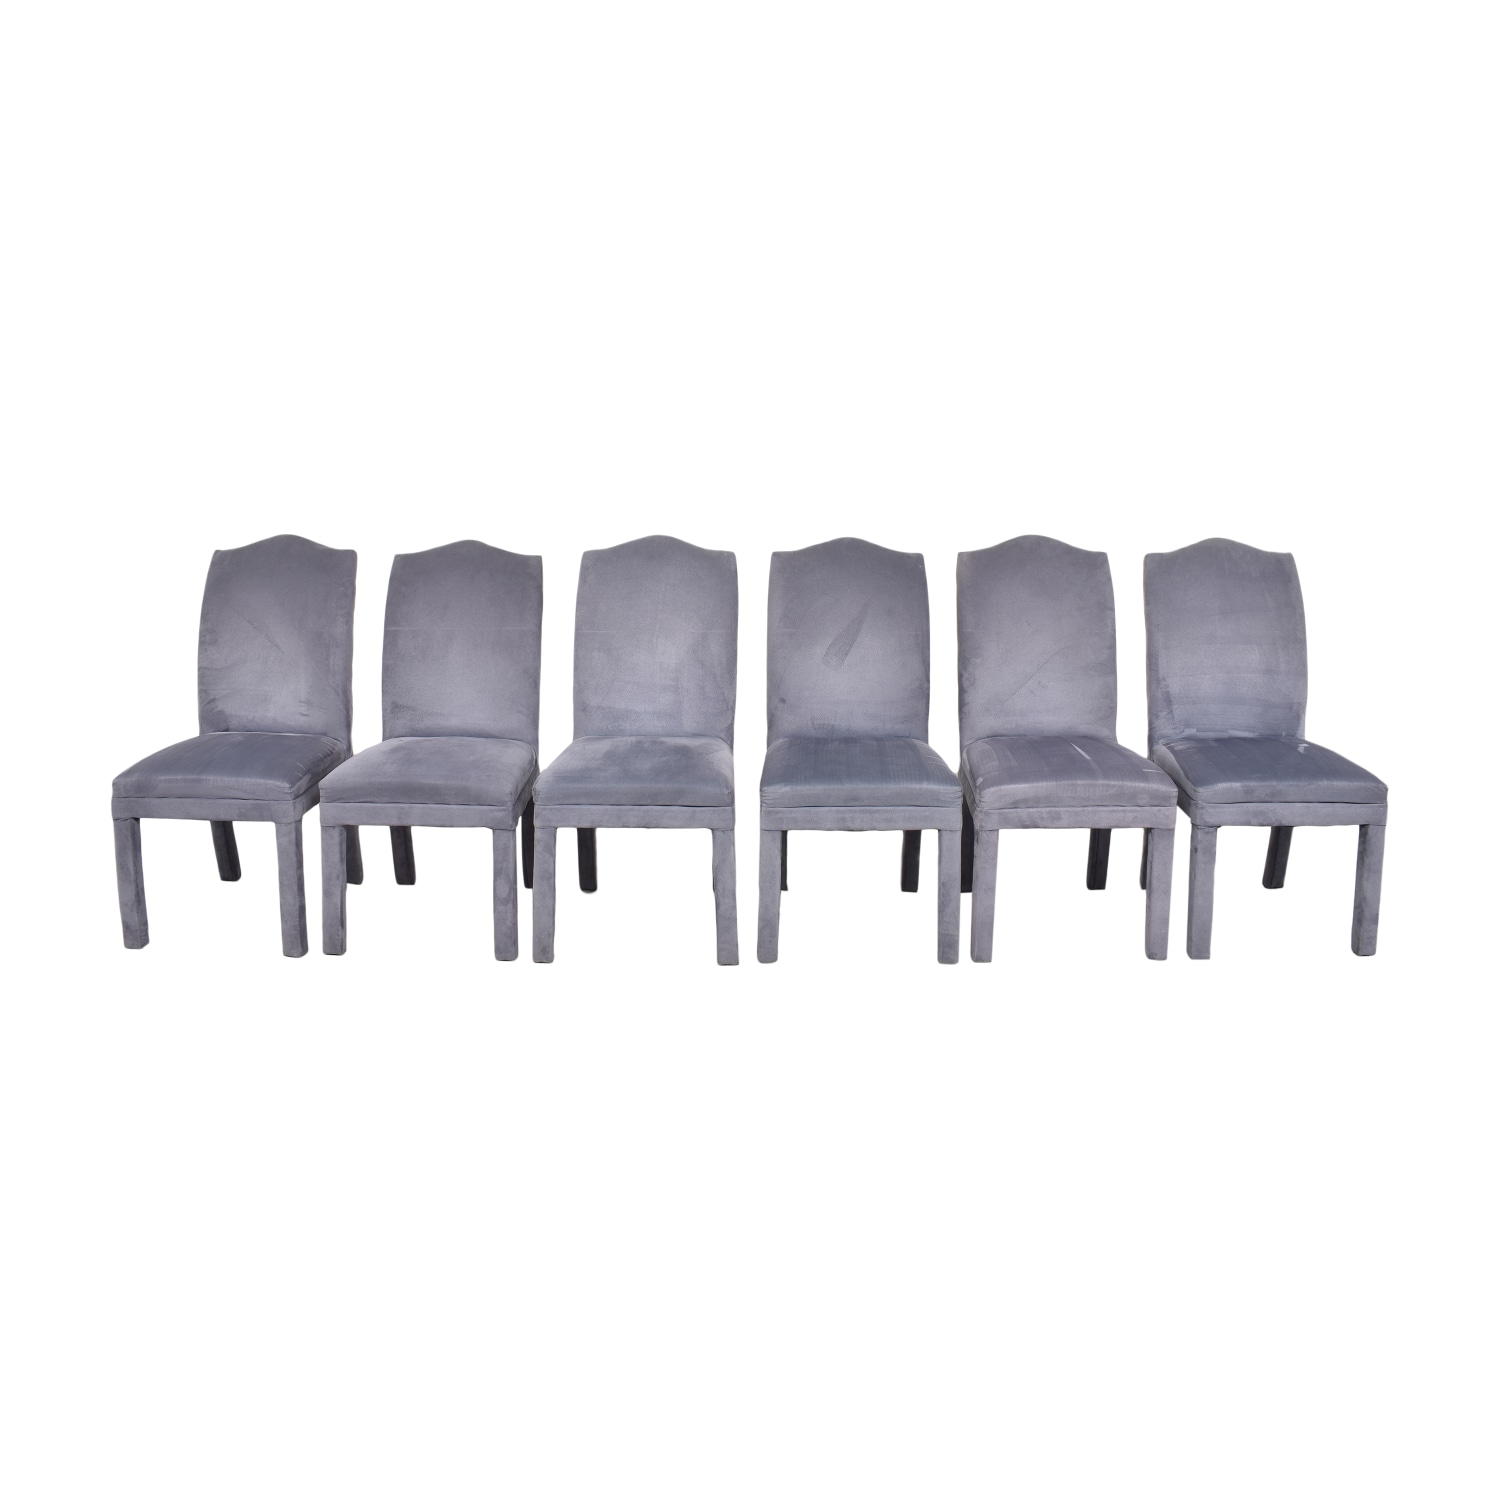 Ballard Designs Ballard Designs Upholstered Dining Chairs Chairs